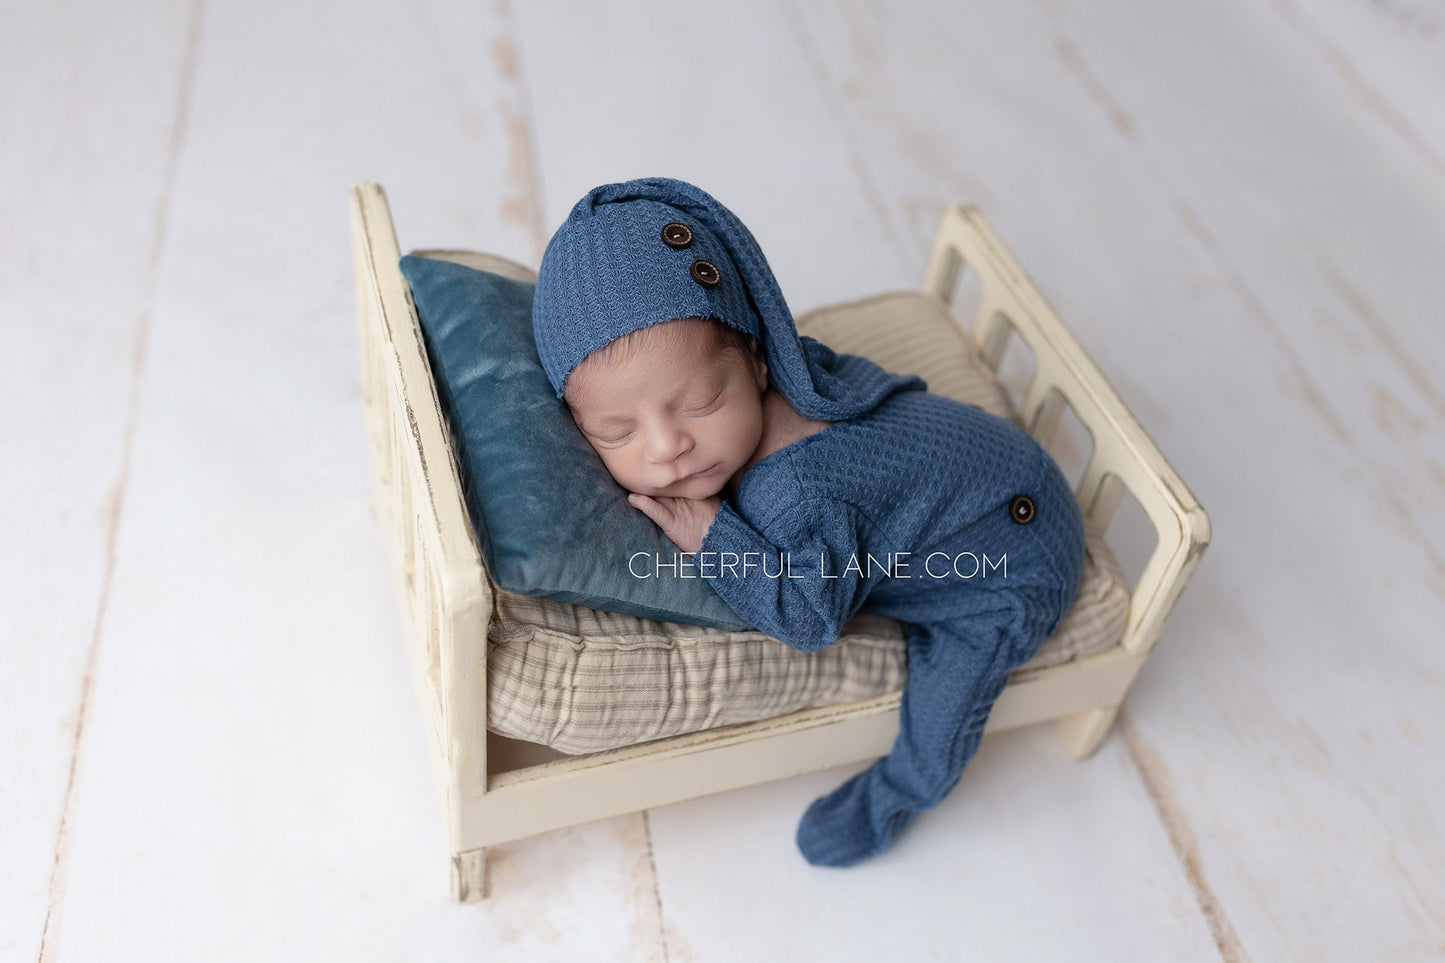 Newborn Photography Prop - Newborn Sleeper and Hat Set - Cheerful Lane